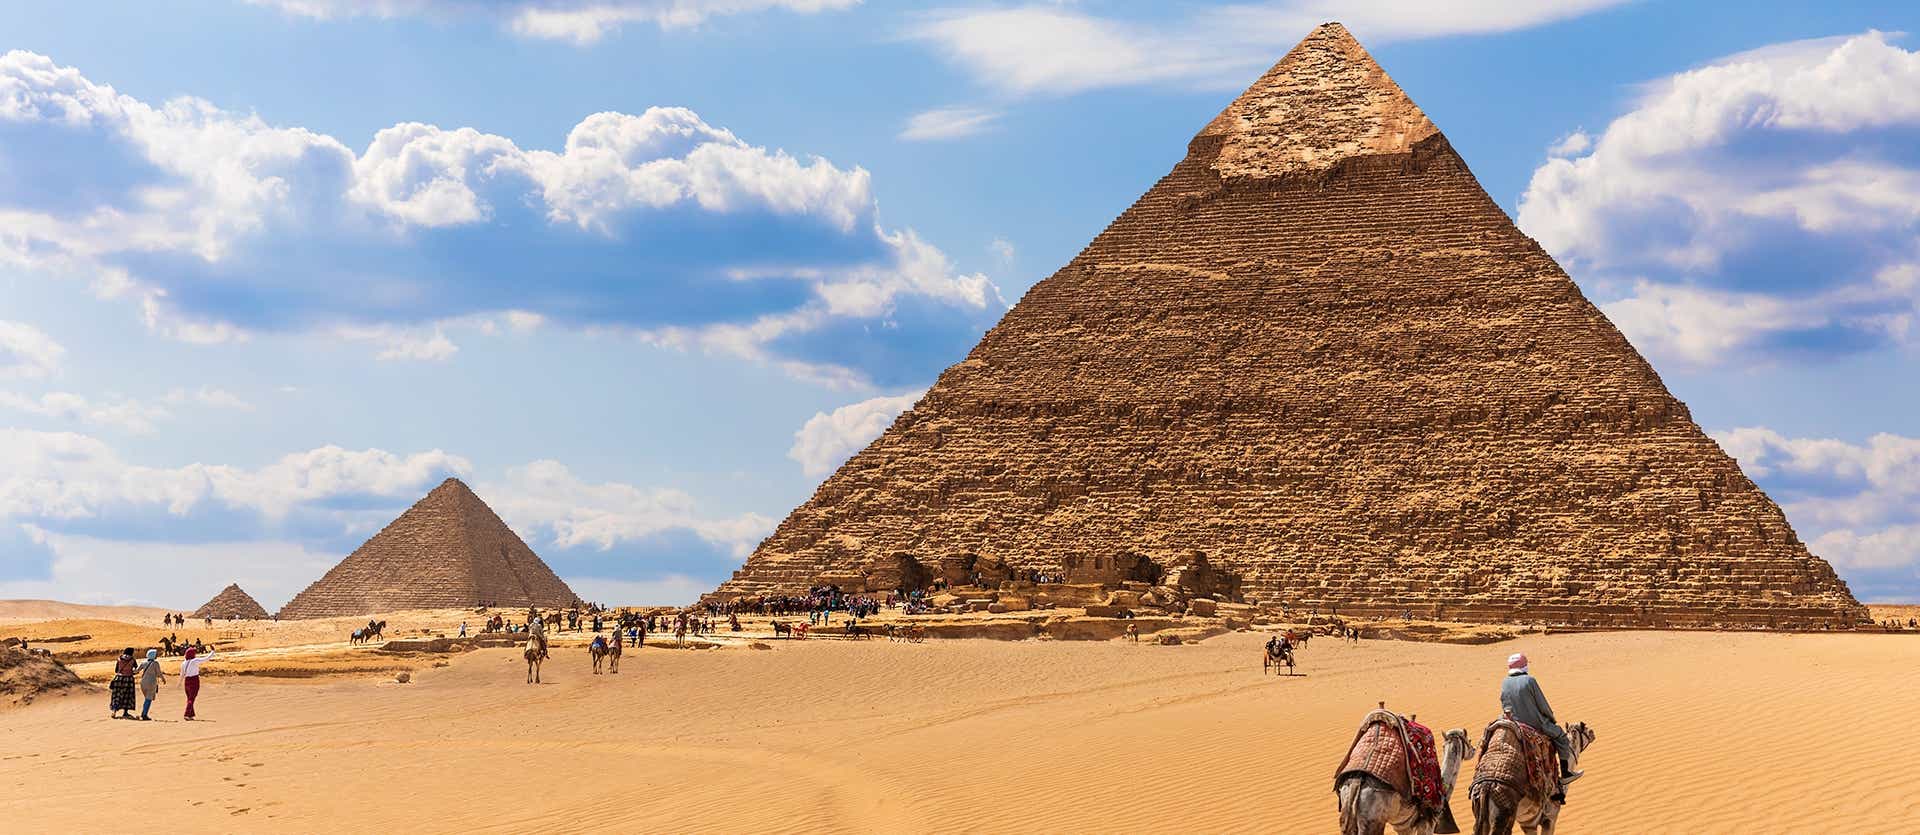 Great Pyramids <span class="iconos separador"></span> Giza <span class="iconos separador"></span> Egypt